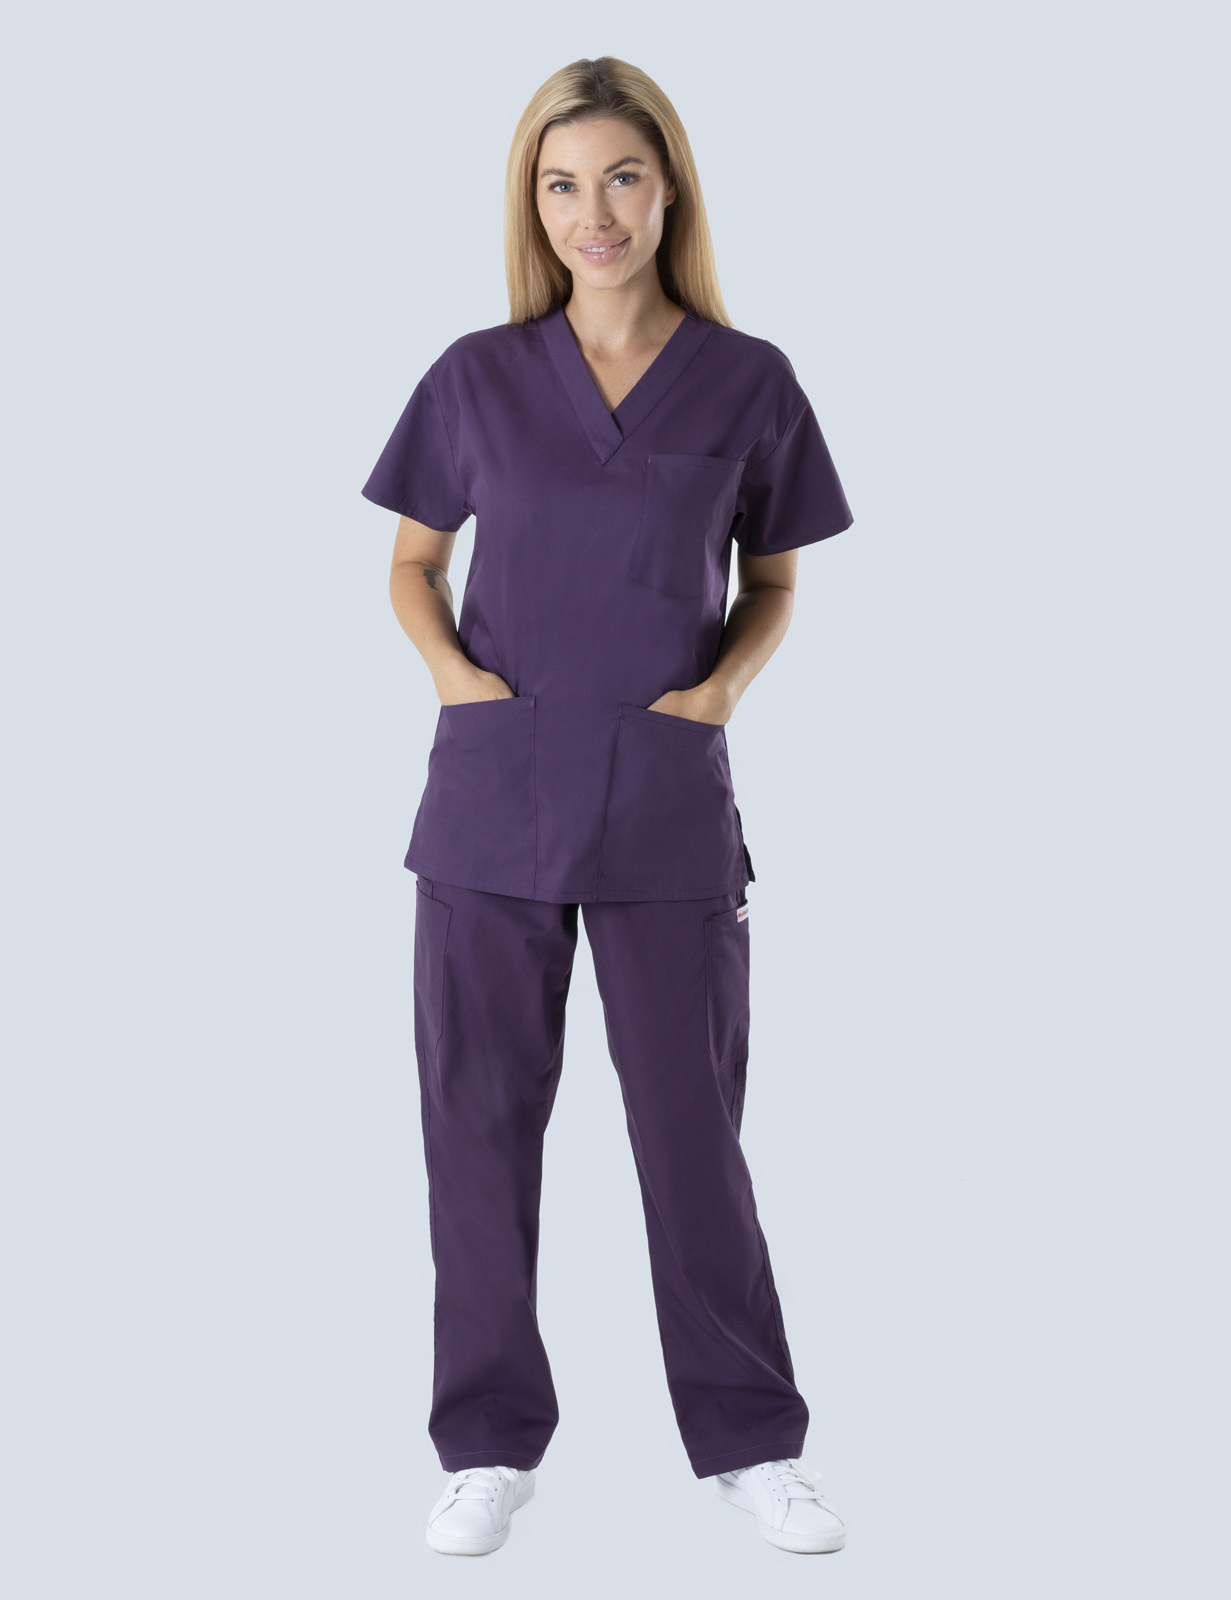 Caloundra Hospital - Midwife (4 Pocket Scrub Top and Cargo Pants in Aubergine incl Logos)